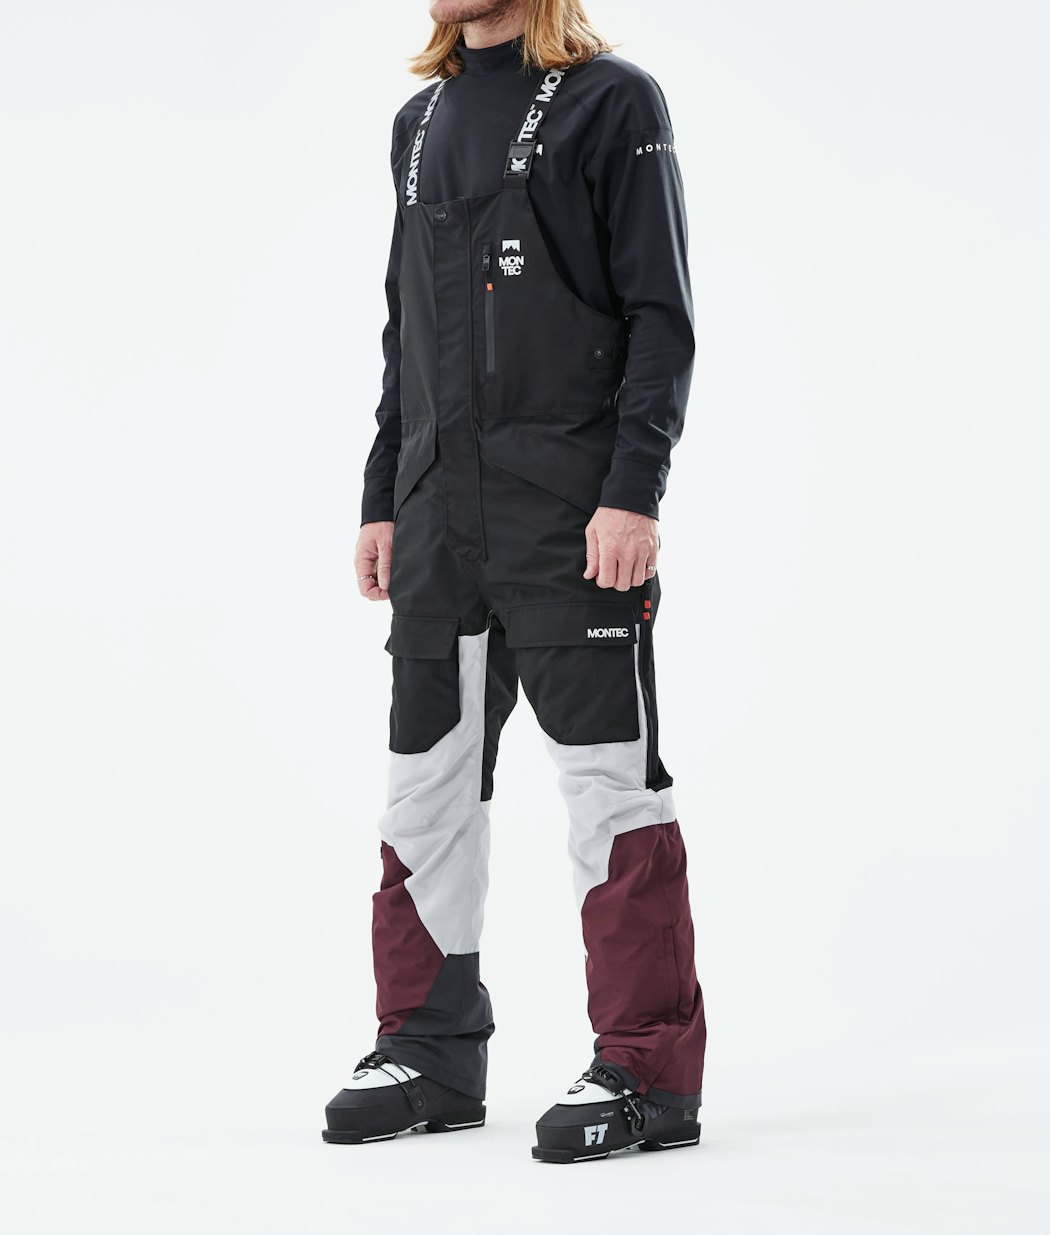 Fawk 2021 Ski Pants Men Black/Light Grey/Burgundy